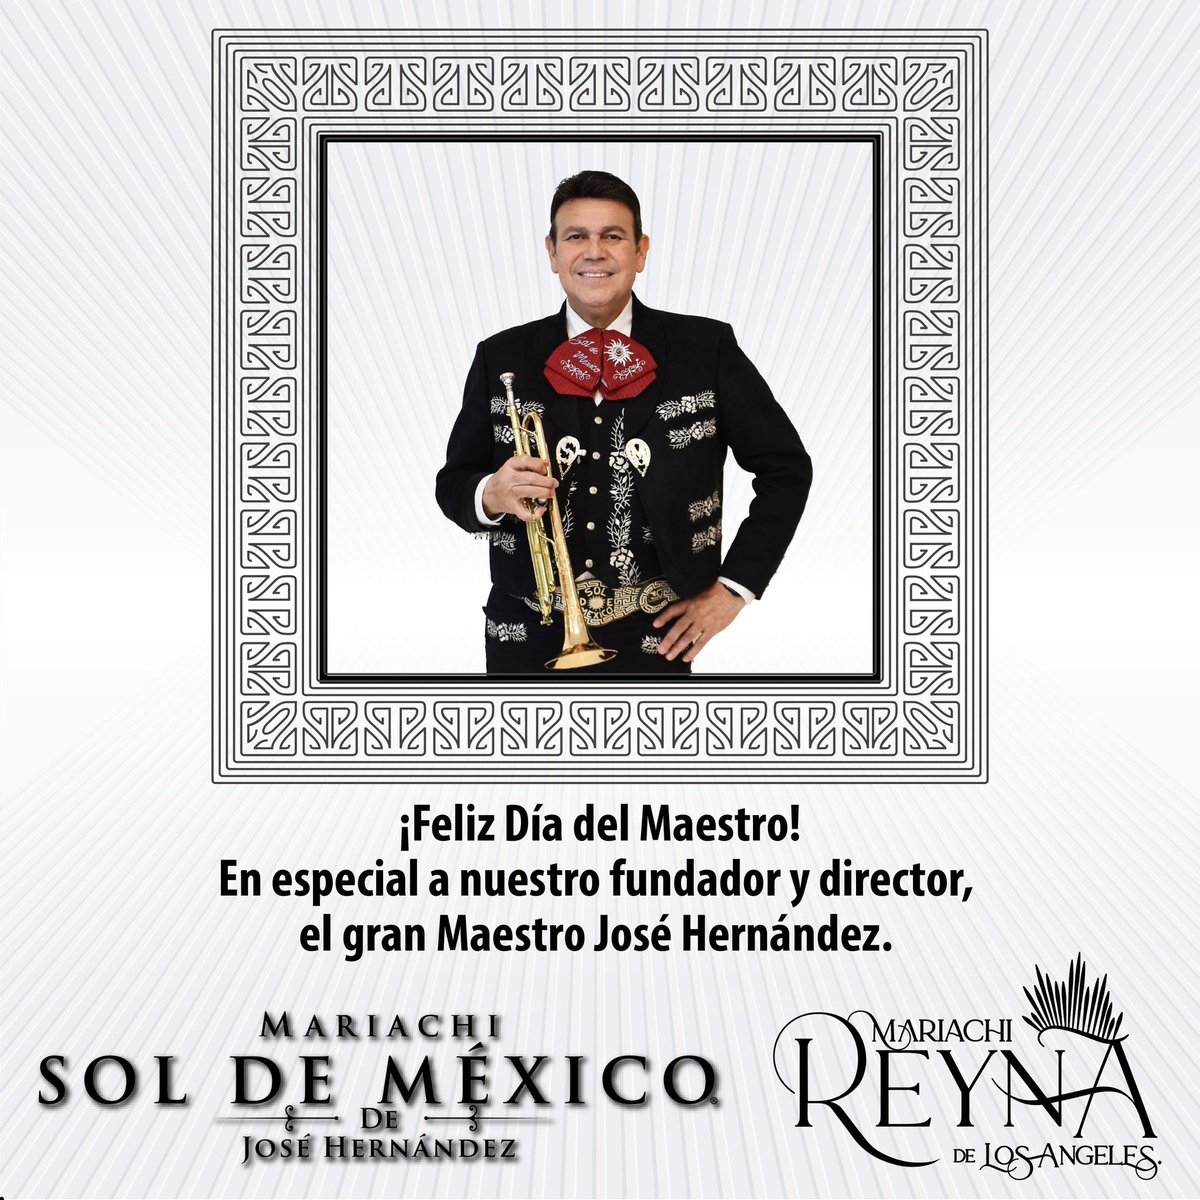 ¡Muchas felicidades Maestro Jose Hernandez! #josehernandez #diadelmaestro #mariachisoldemexicodejosehernandez